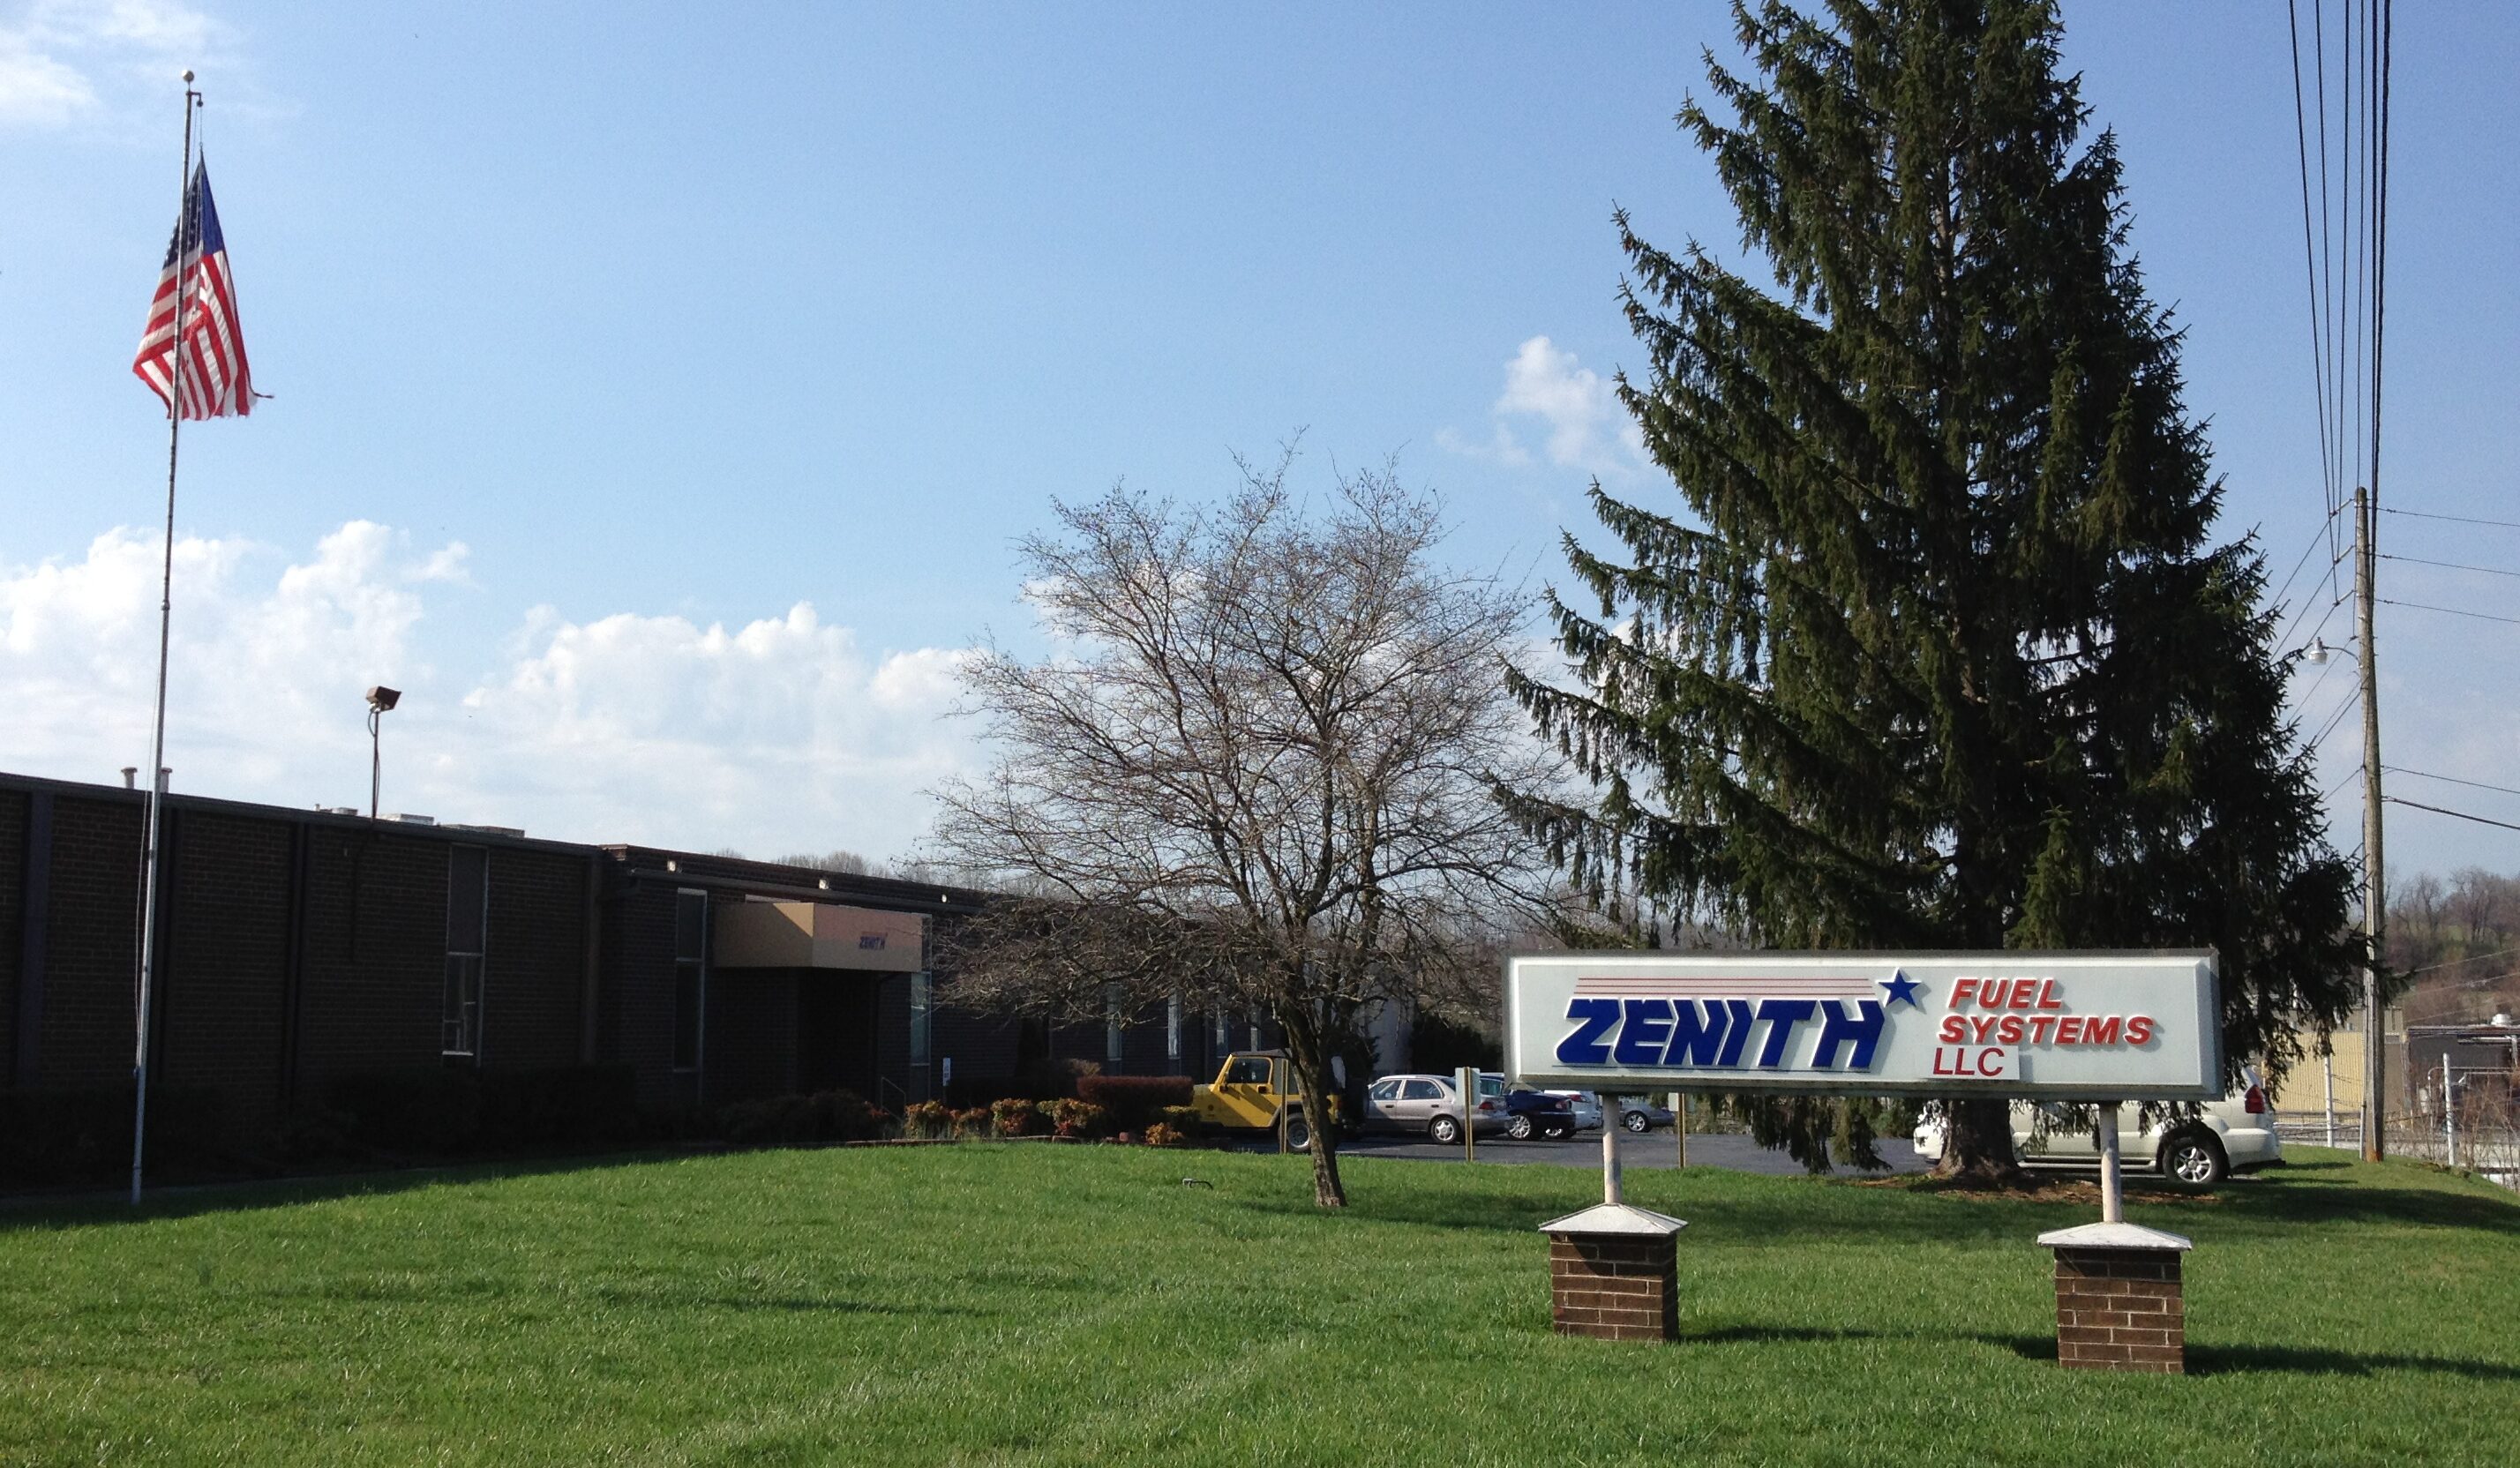 Zenith Fuel System exterior in Bristol, VA